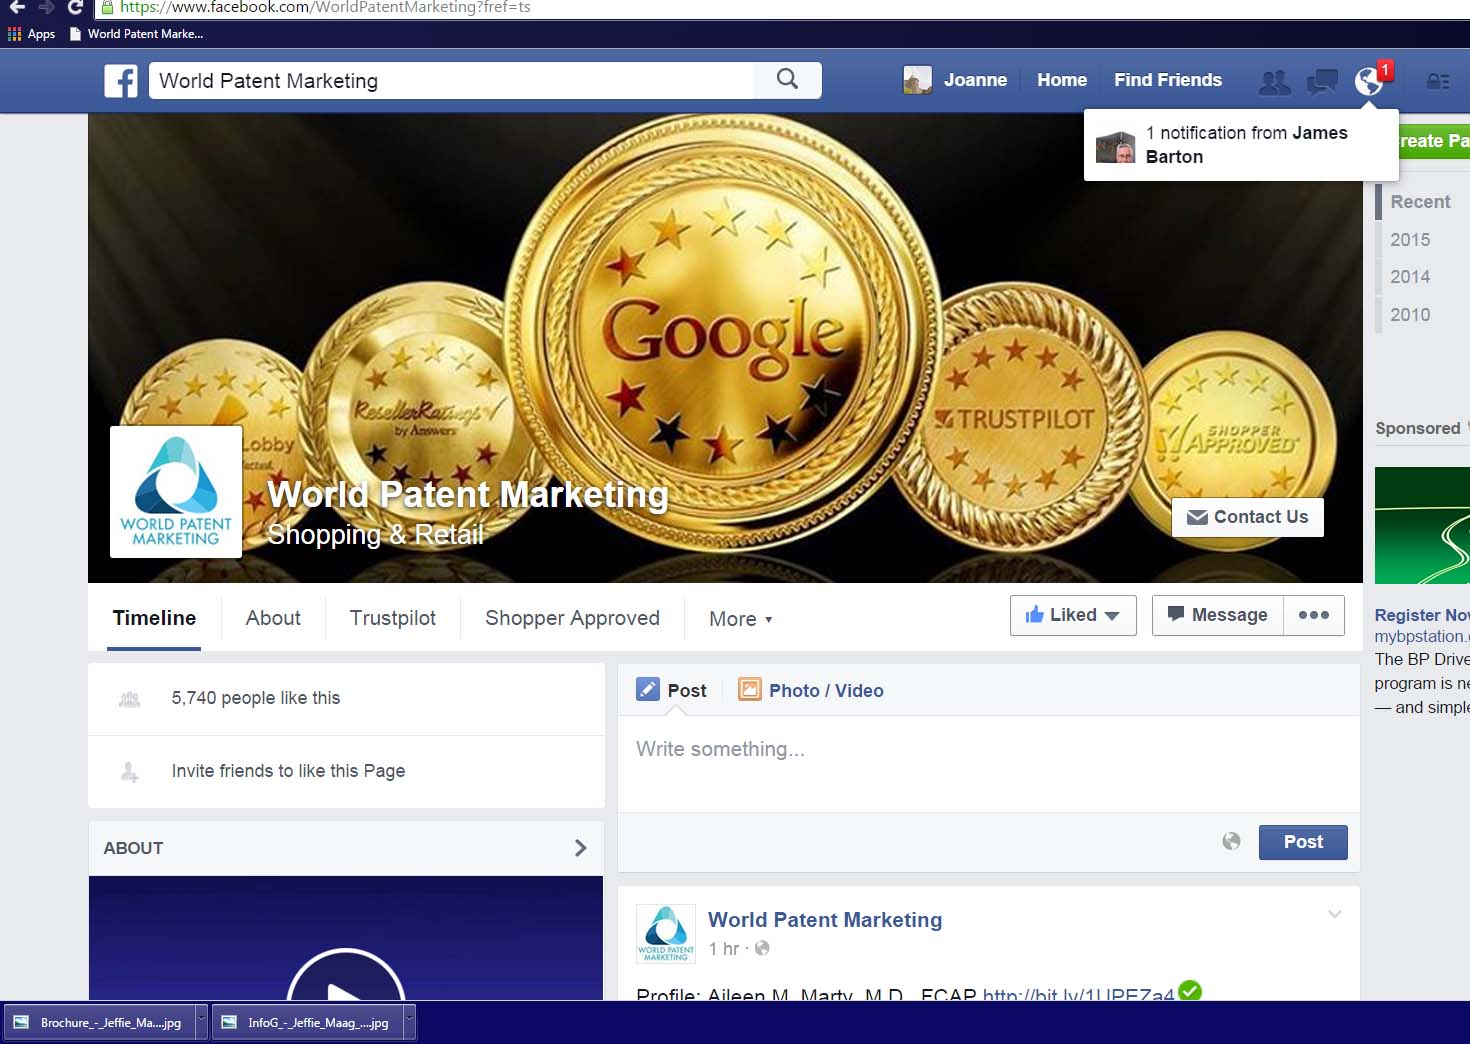 Follow World Patent Marketing on Facebook!